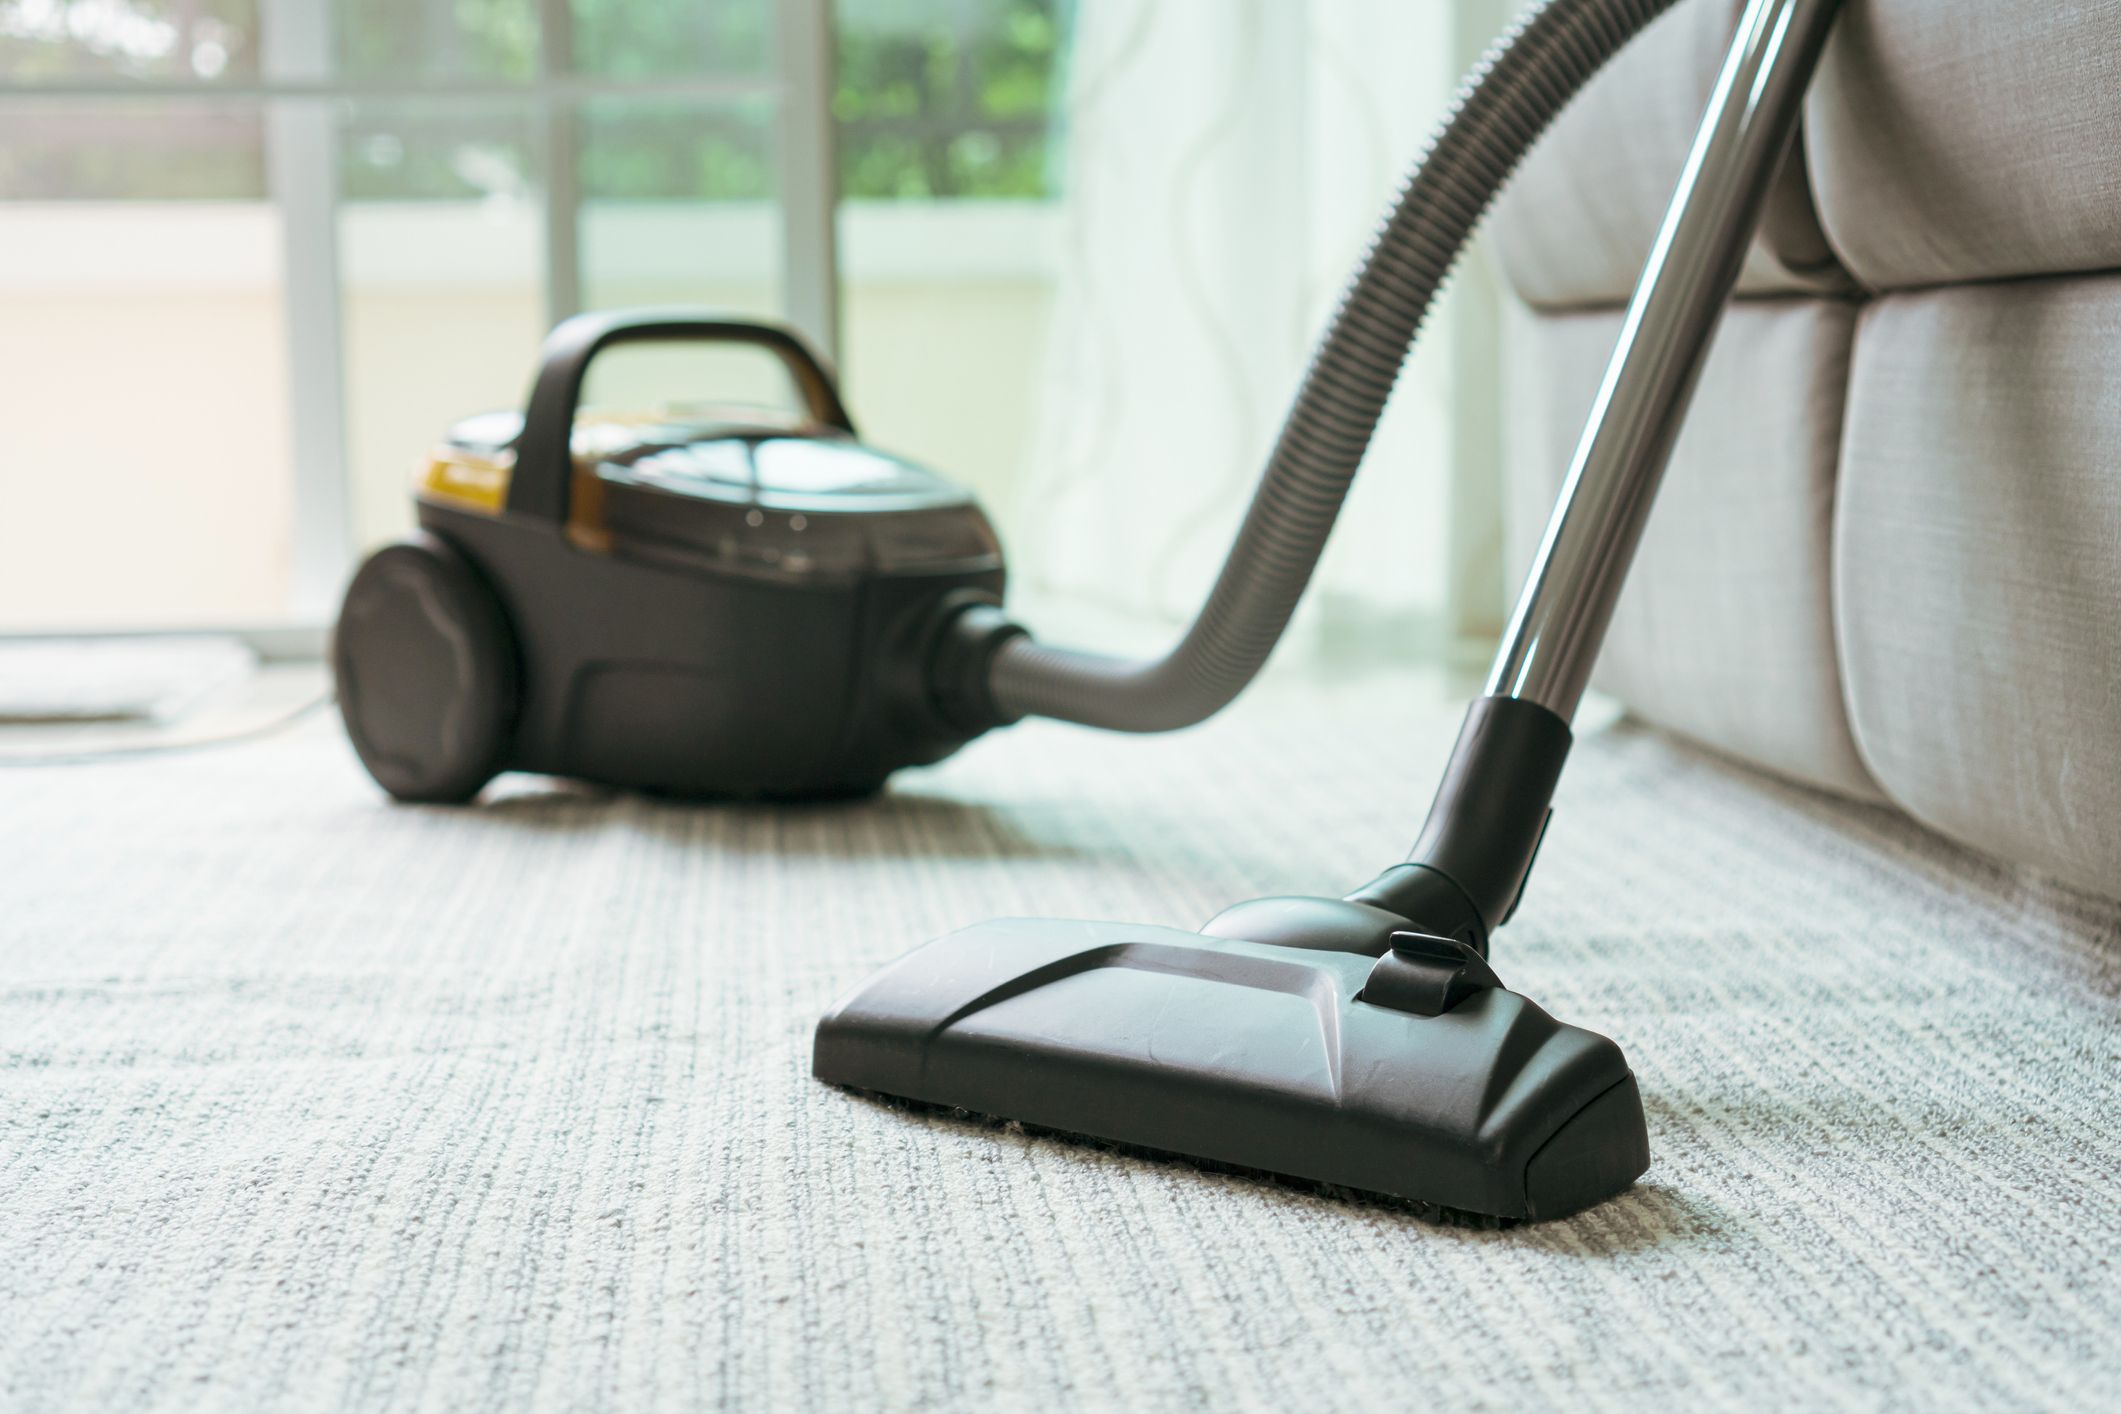 8 Best Hepa Vacuum Cleaners Reviews 2021, Best Inexpensive Vacuum For Hardwood Floors And Carpet